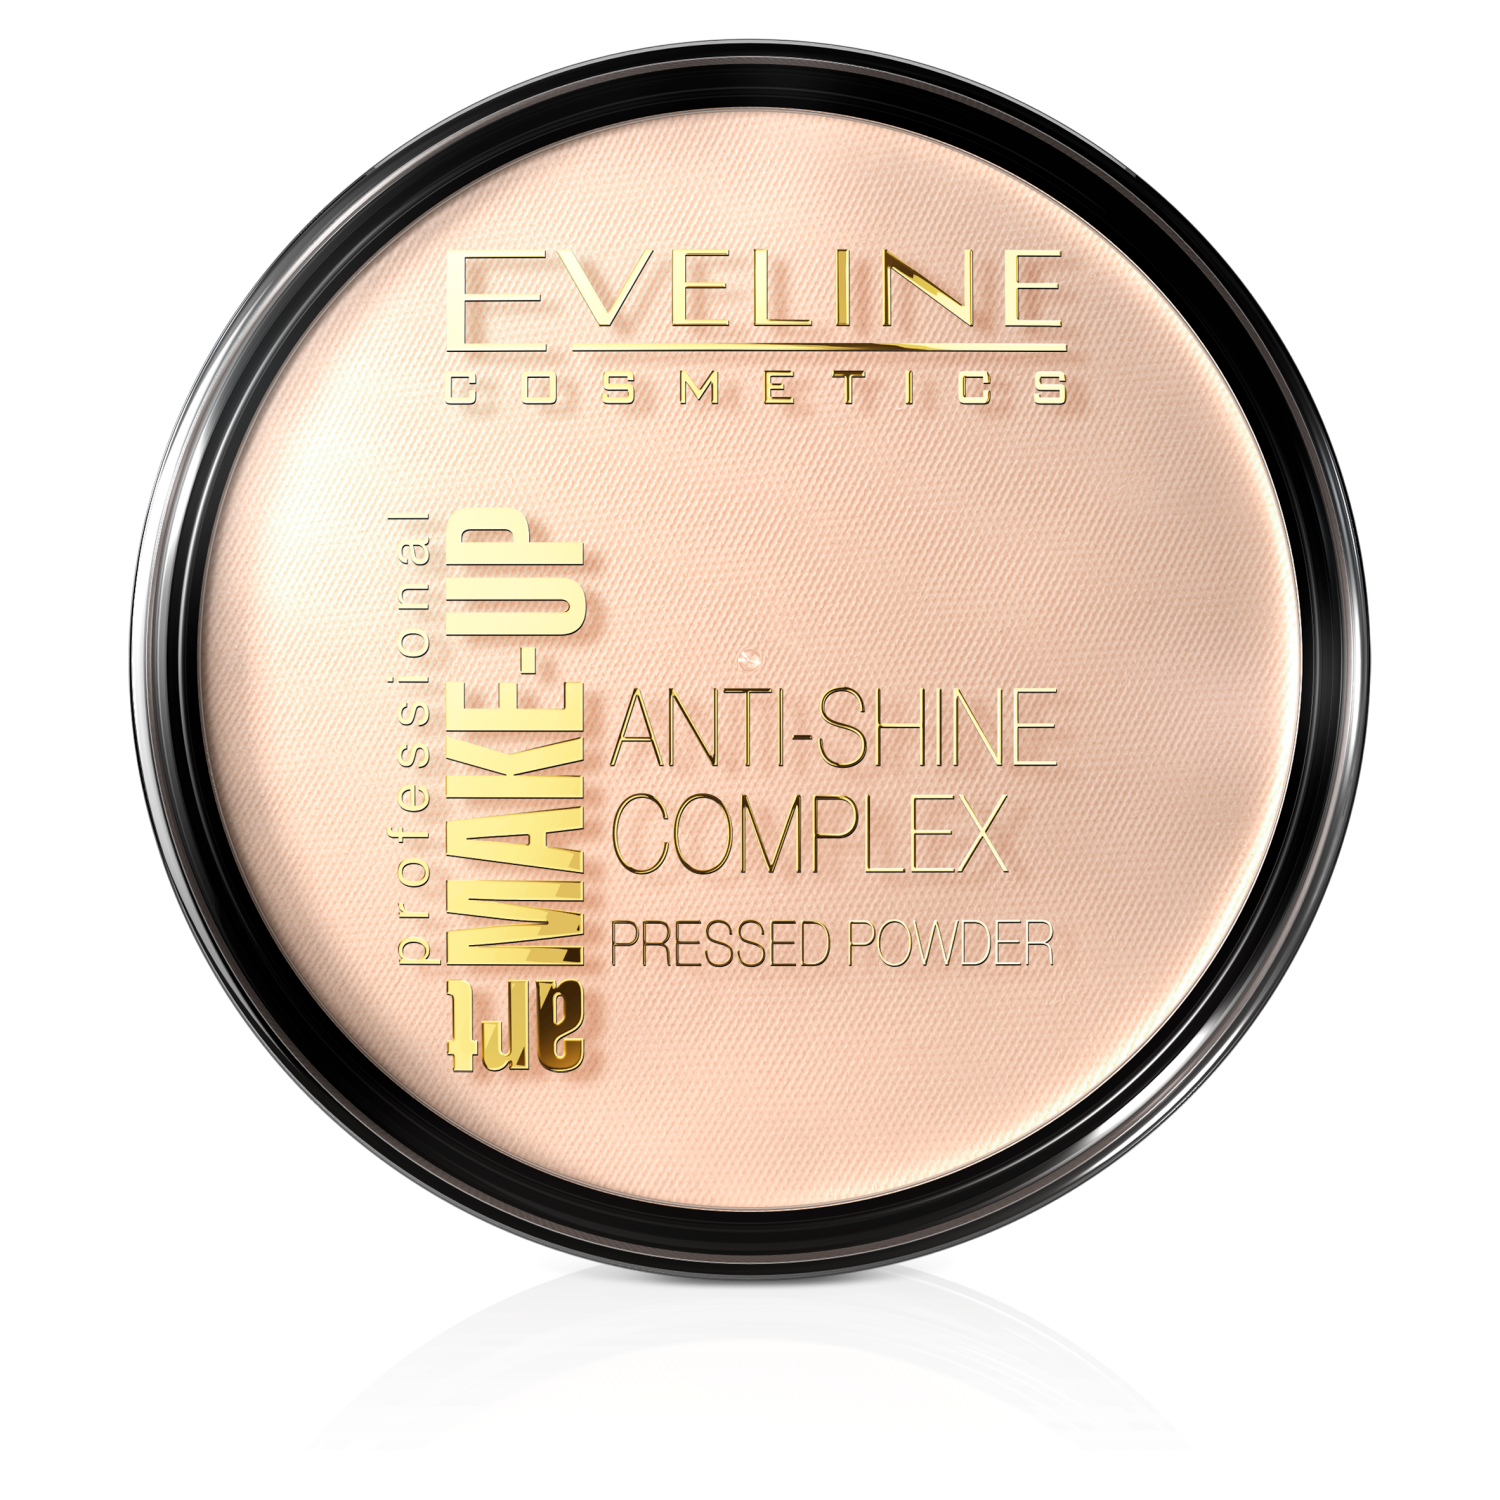 Пудра для лица натуральная 32 Eveline Cosmetics Art Make-Up Anti Shine Complex, 14 гр пудра для лица eveline anti shine complex матирующая тон 32 натуральный